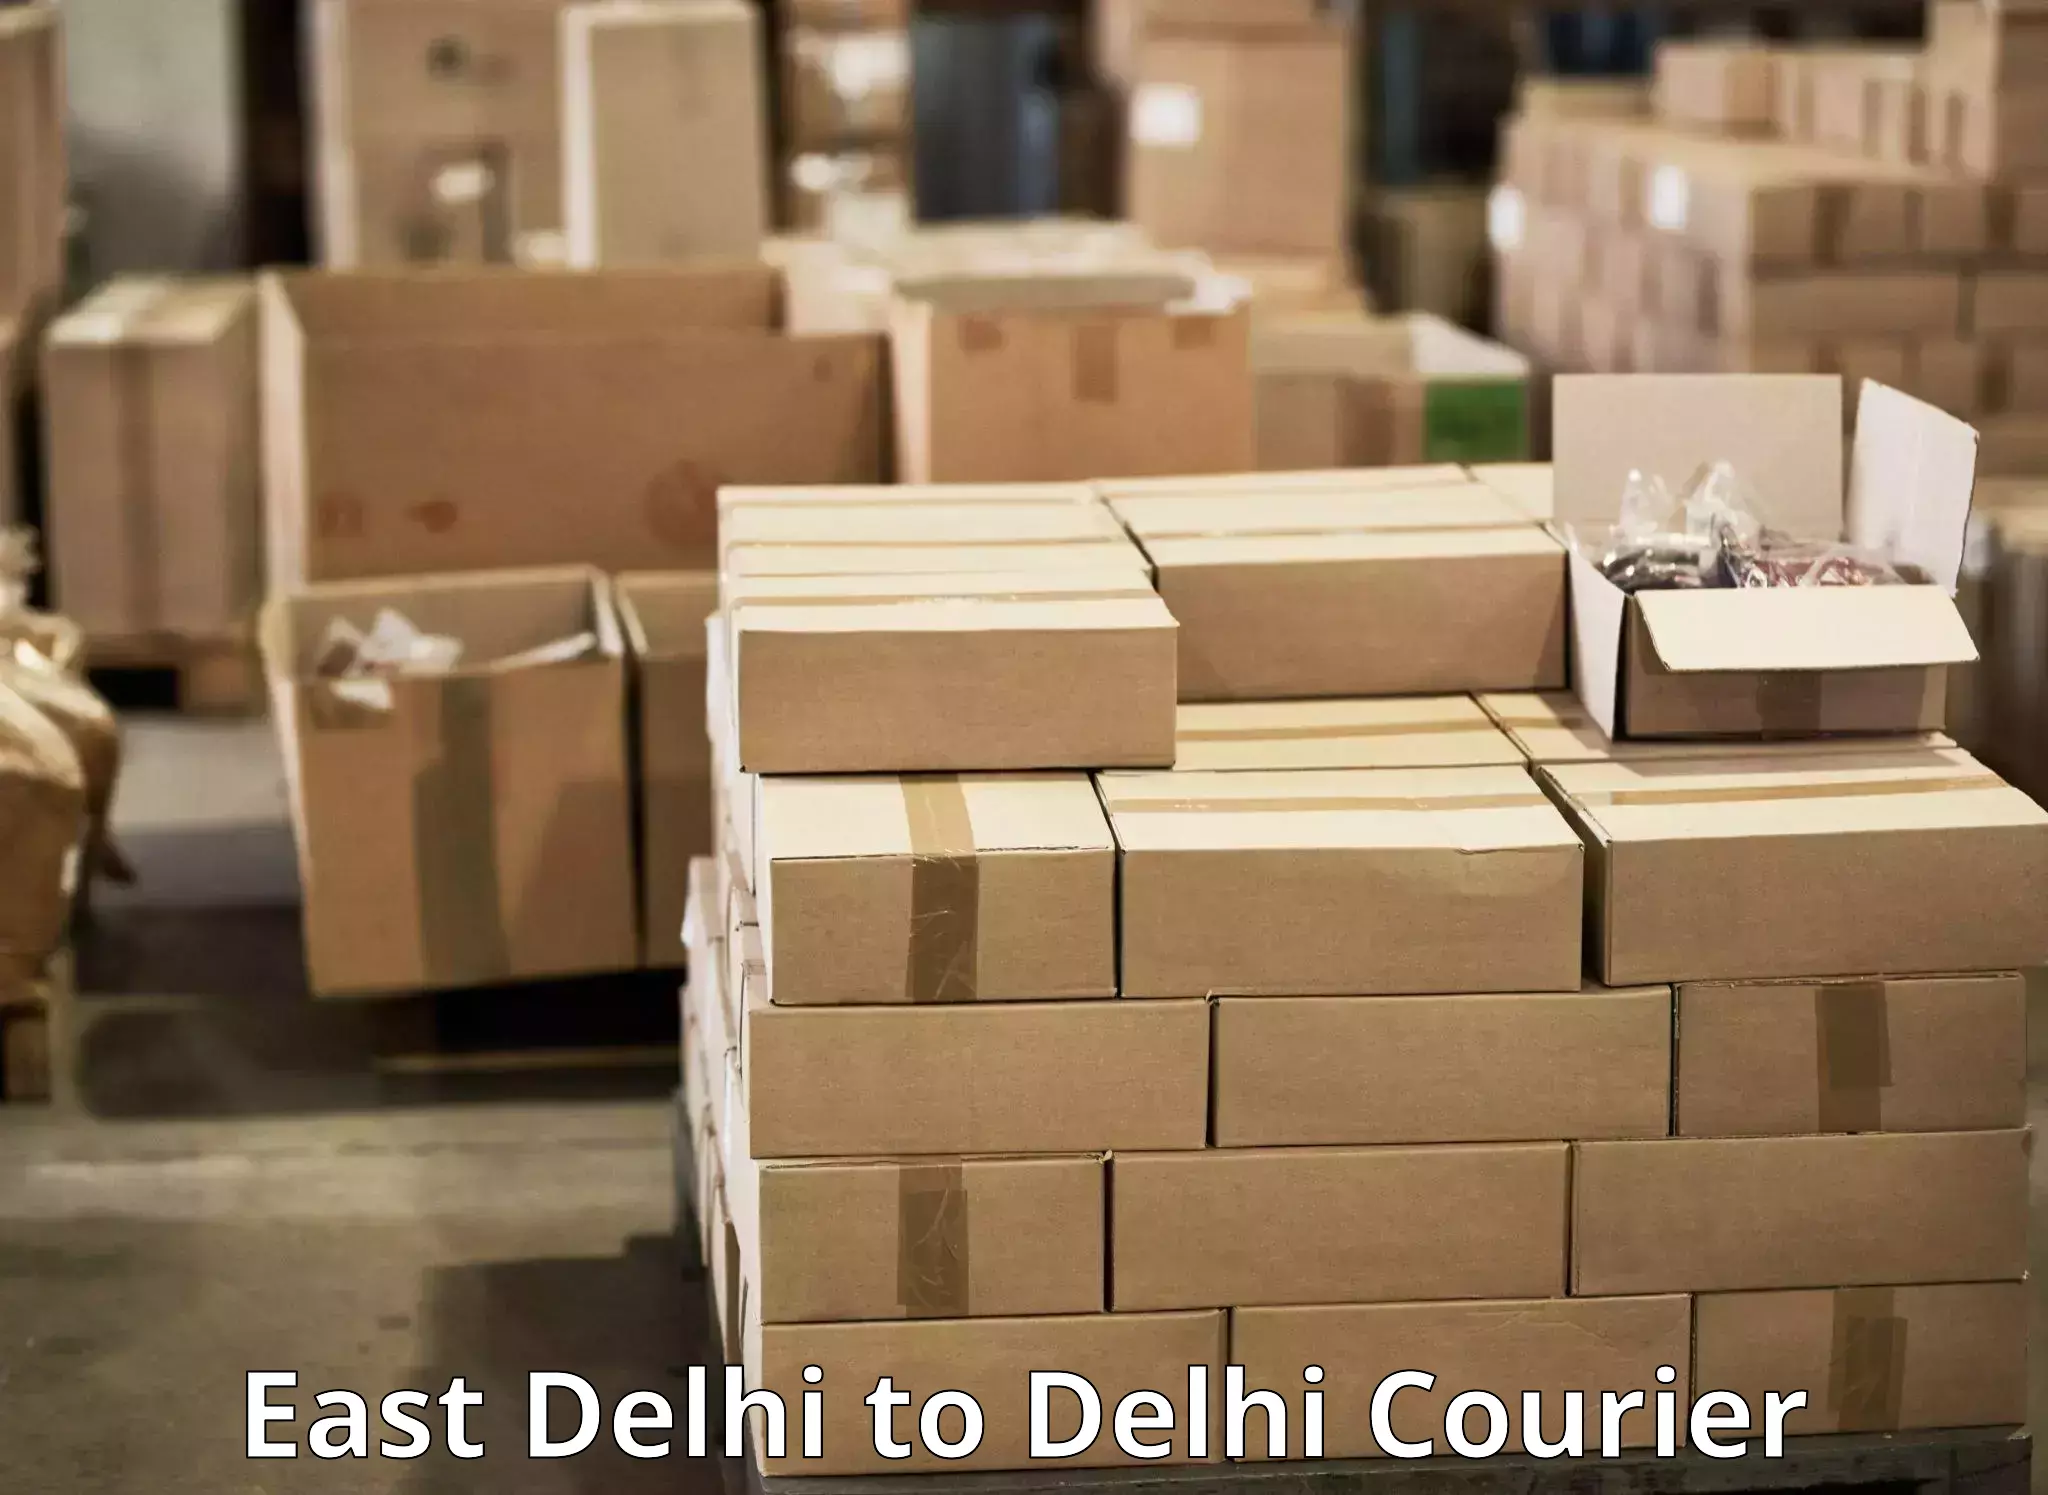 Courier service booking East Delhi to Subhash Nagar